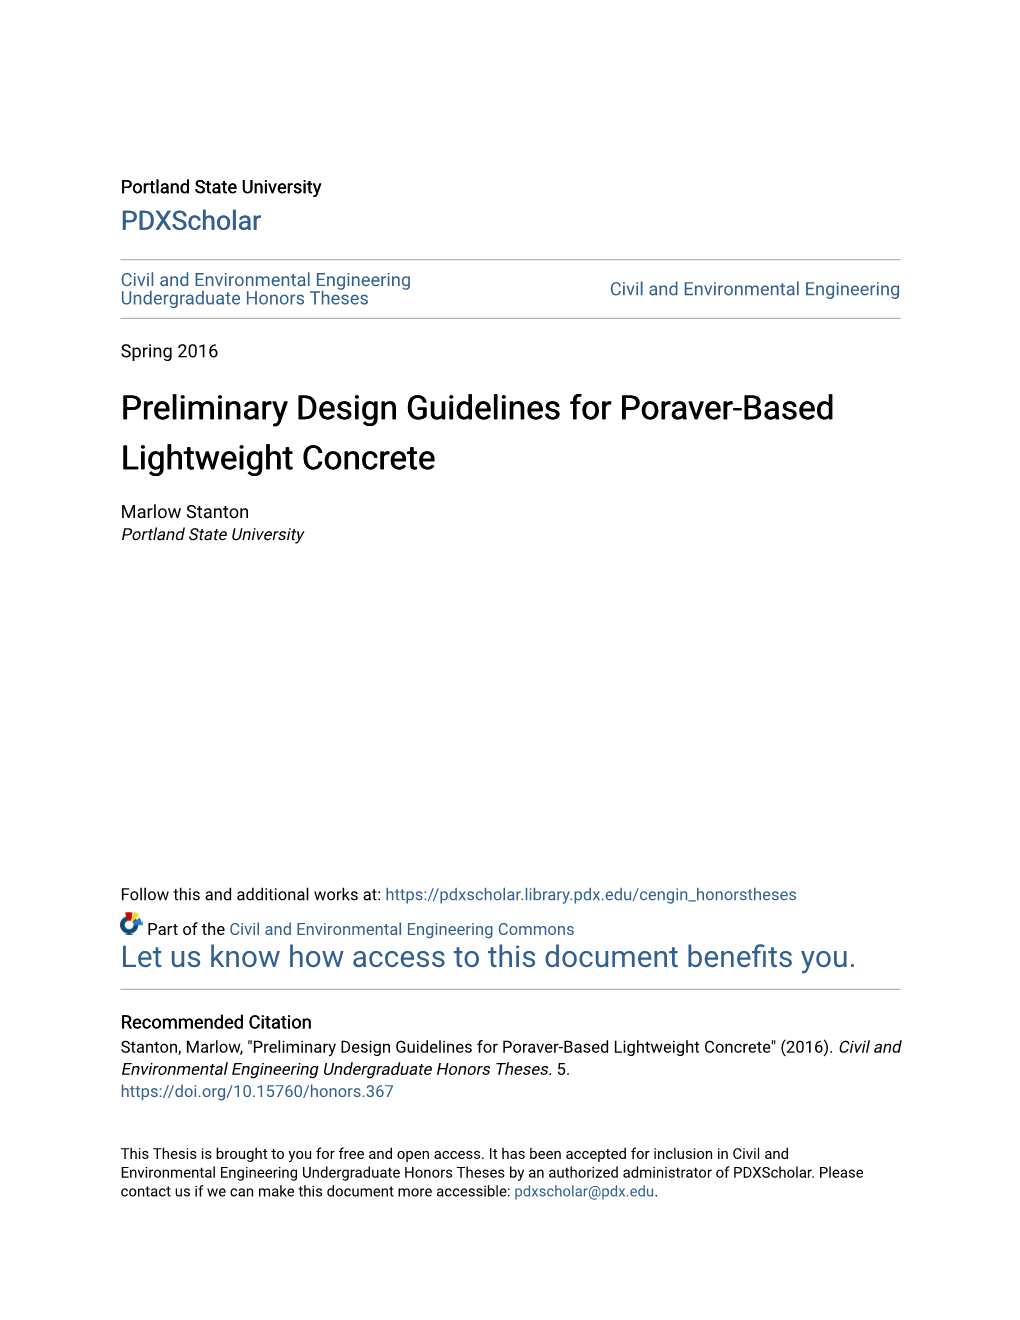 Preliminary Design Guidelines for Poraver-Based Lightweight Concrete